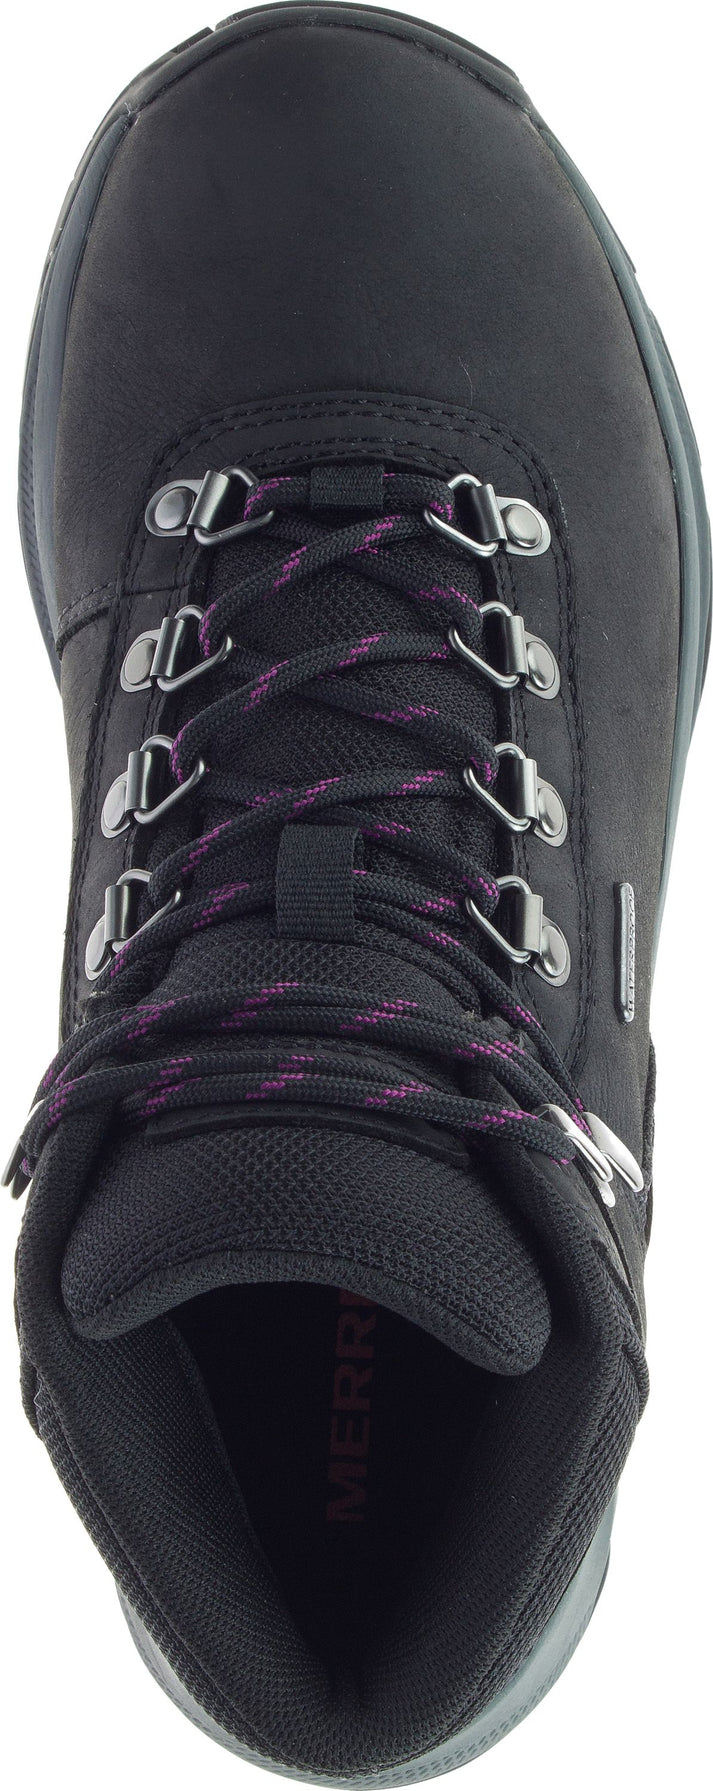 Merrell Boots Erie Mid Leather Waterproof Black/purple